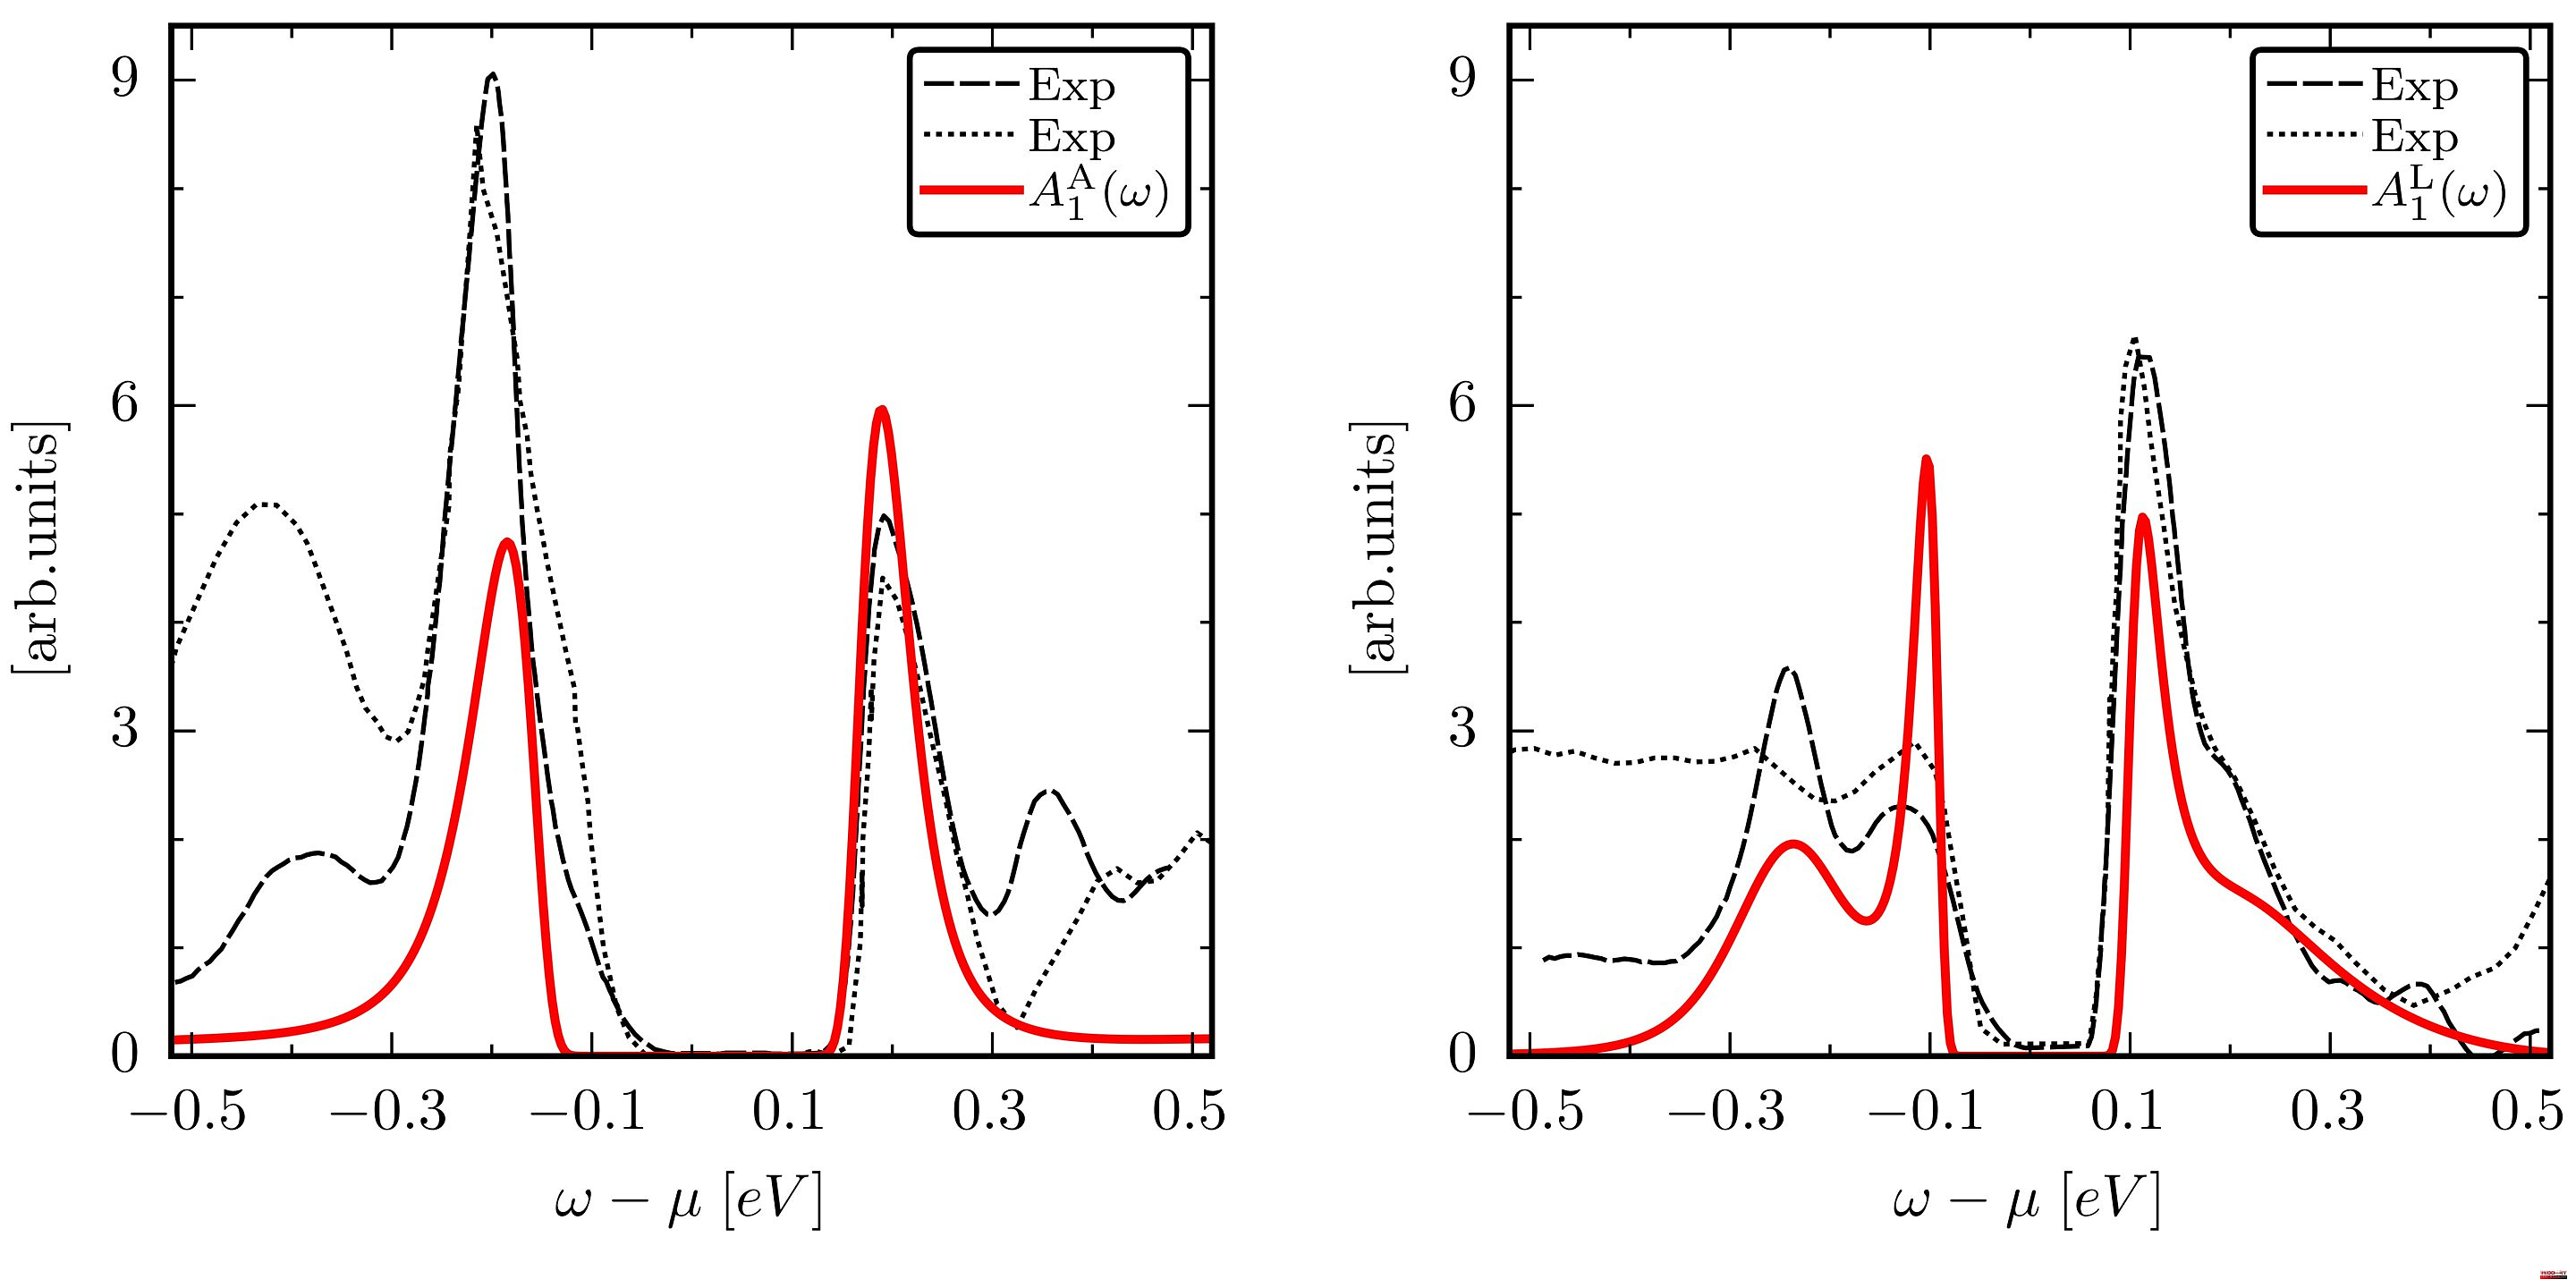 A novel quantum simulation method clarifies the correlated properties complex material 1T-TaS2